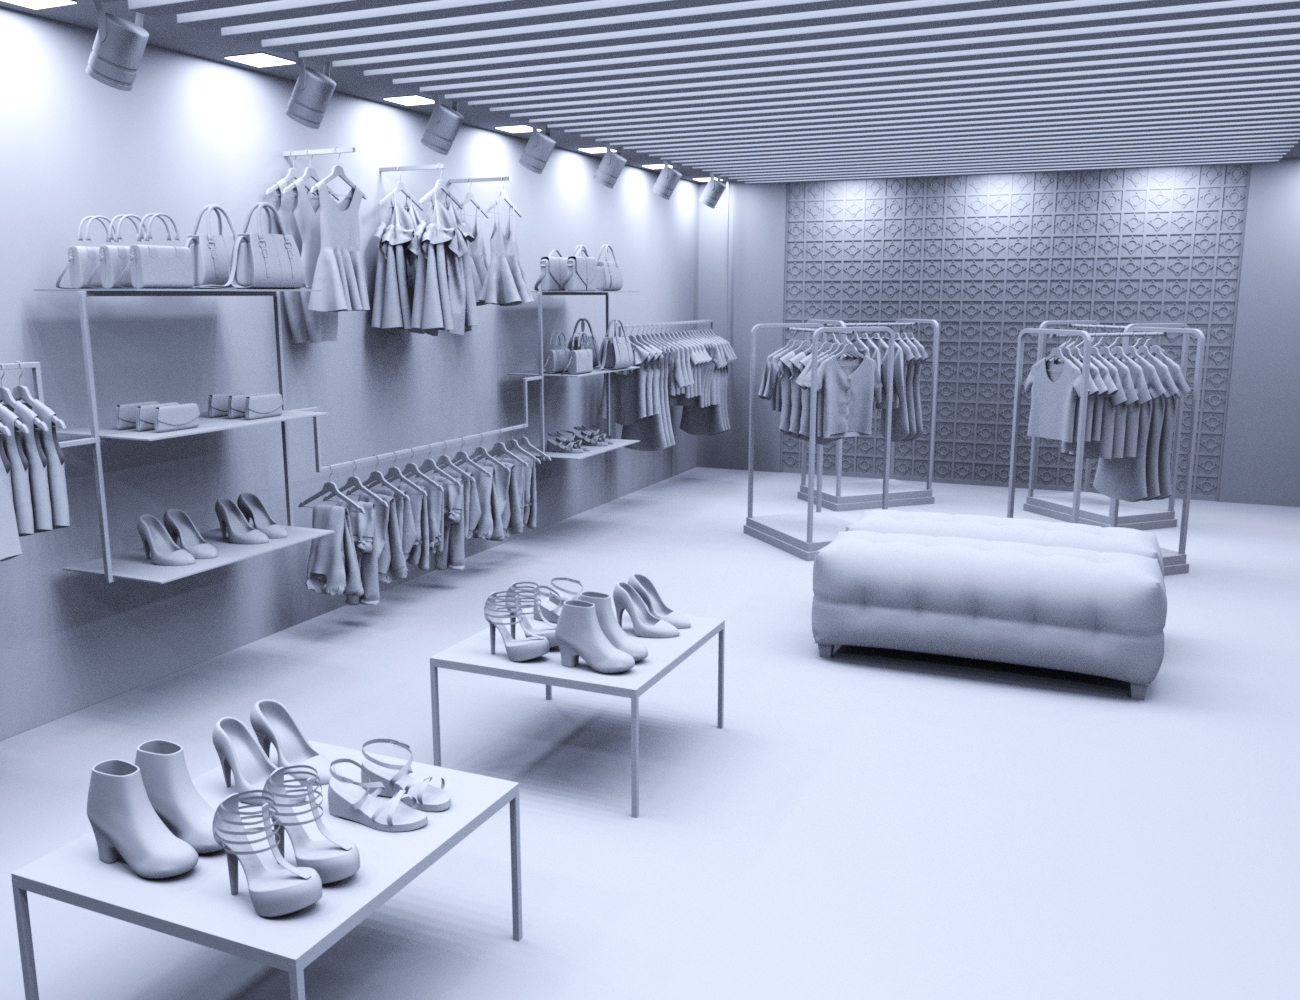 Clothes Shop by: Charlie, 3D Models by Daz 3D